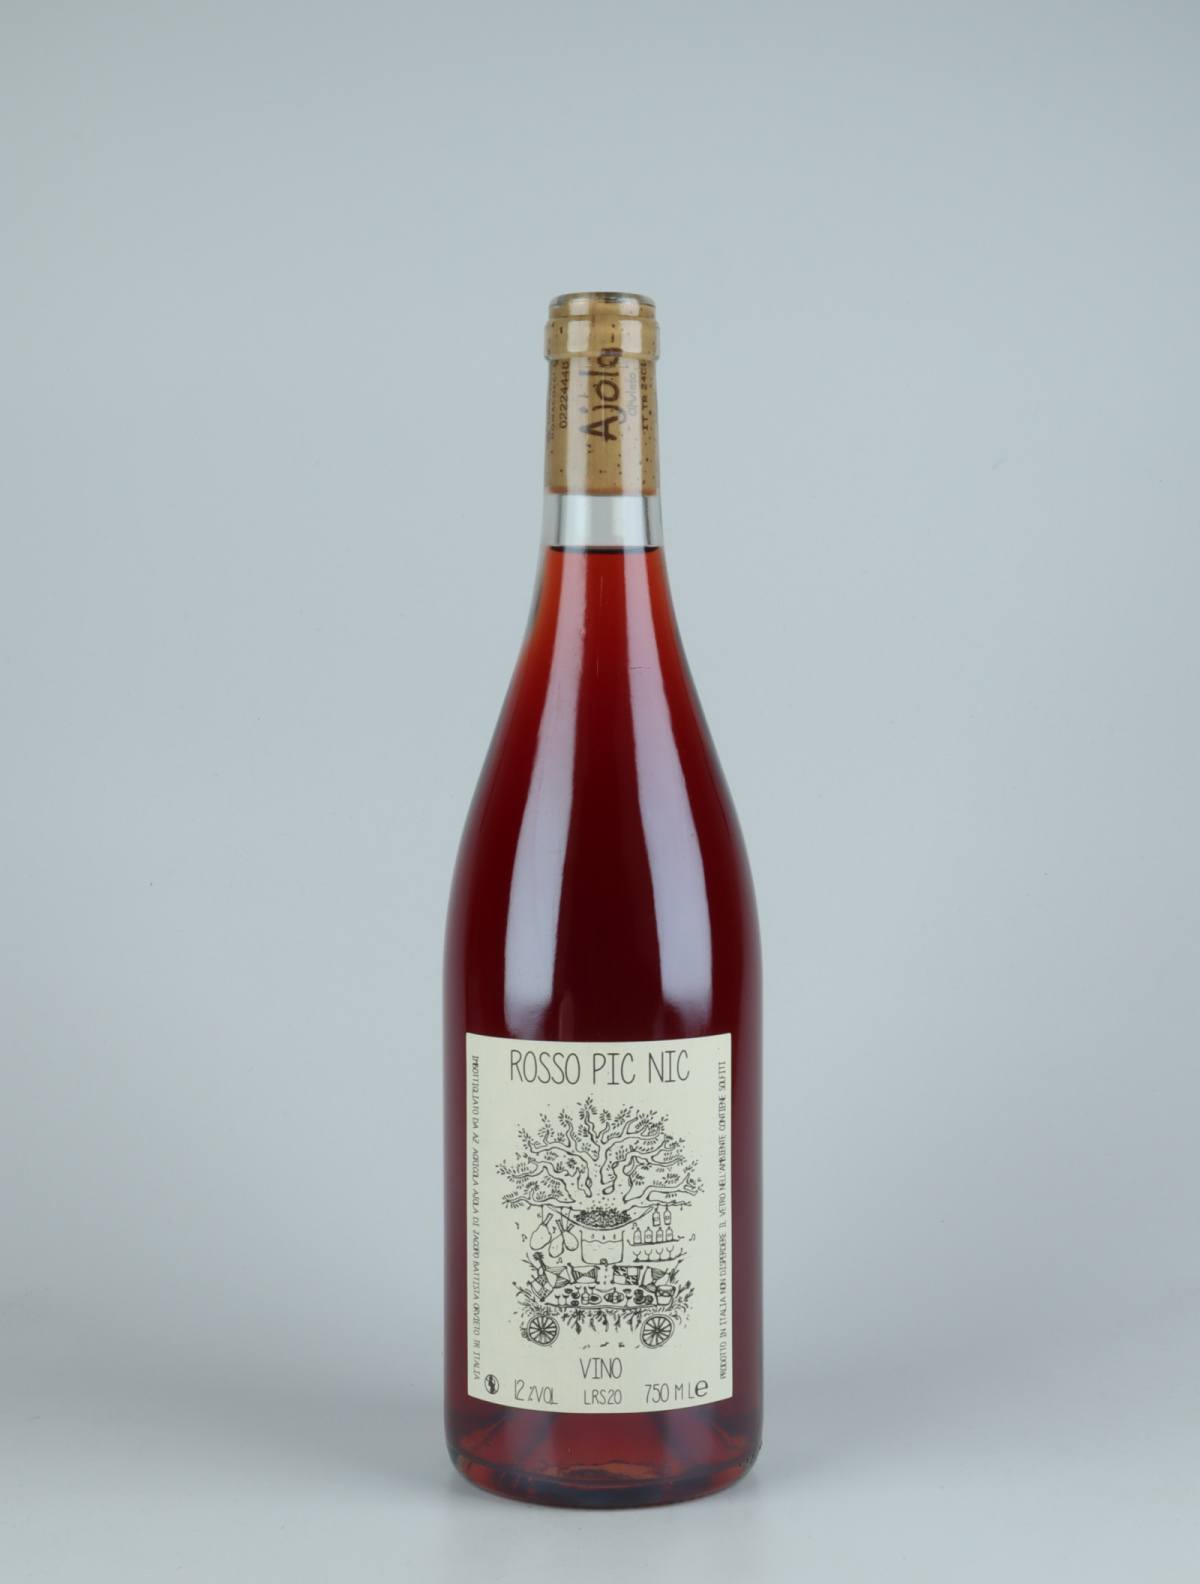 En flaske 2020 Vino Rosso Pic Nic Rødvin fra Ajola, Umbrien i Italien